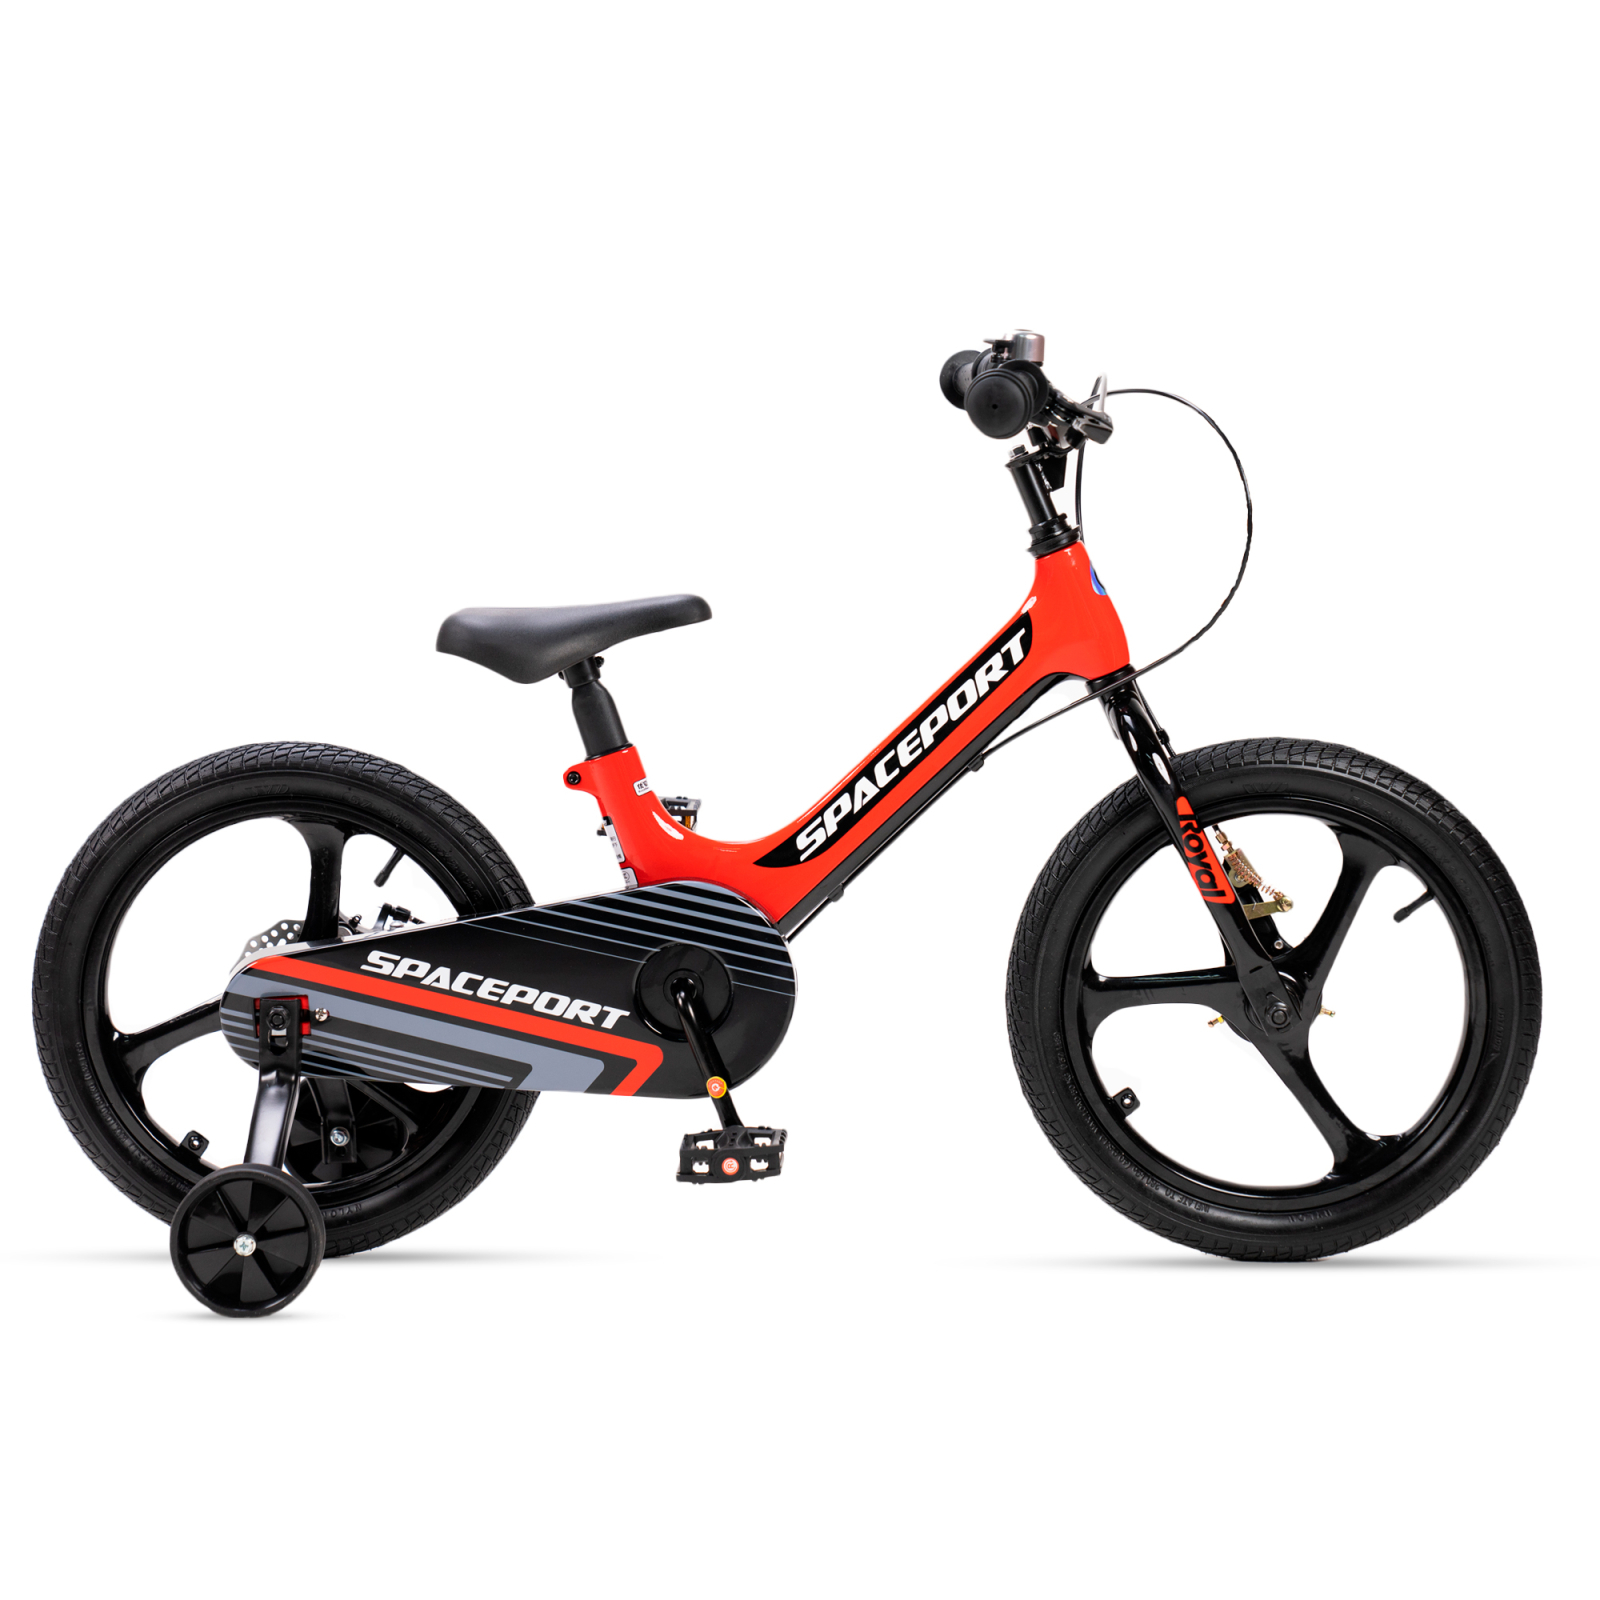 Дитячий велосипед Royal Baby Space Port 16", Official UA, червоний (RB16-31-red)